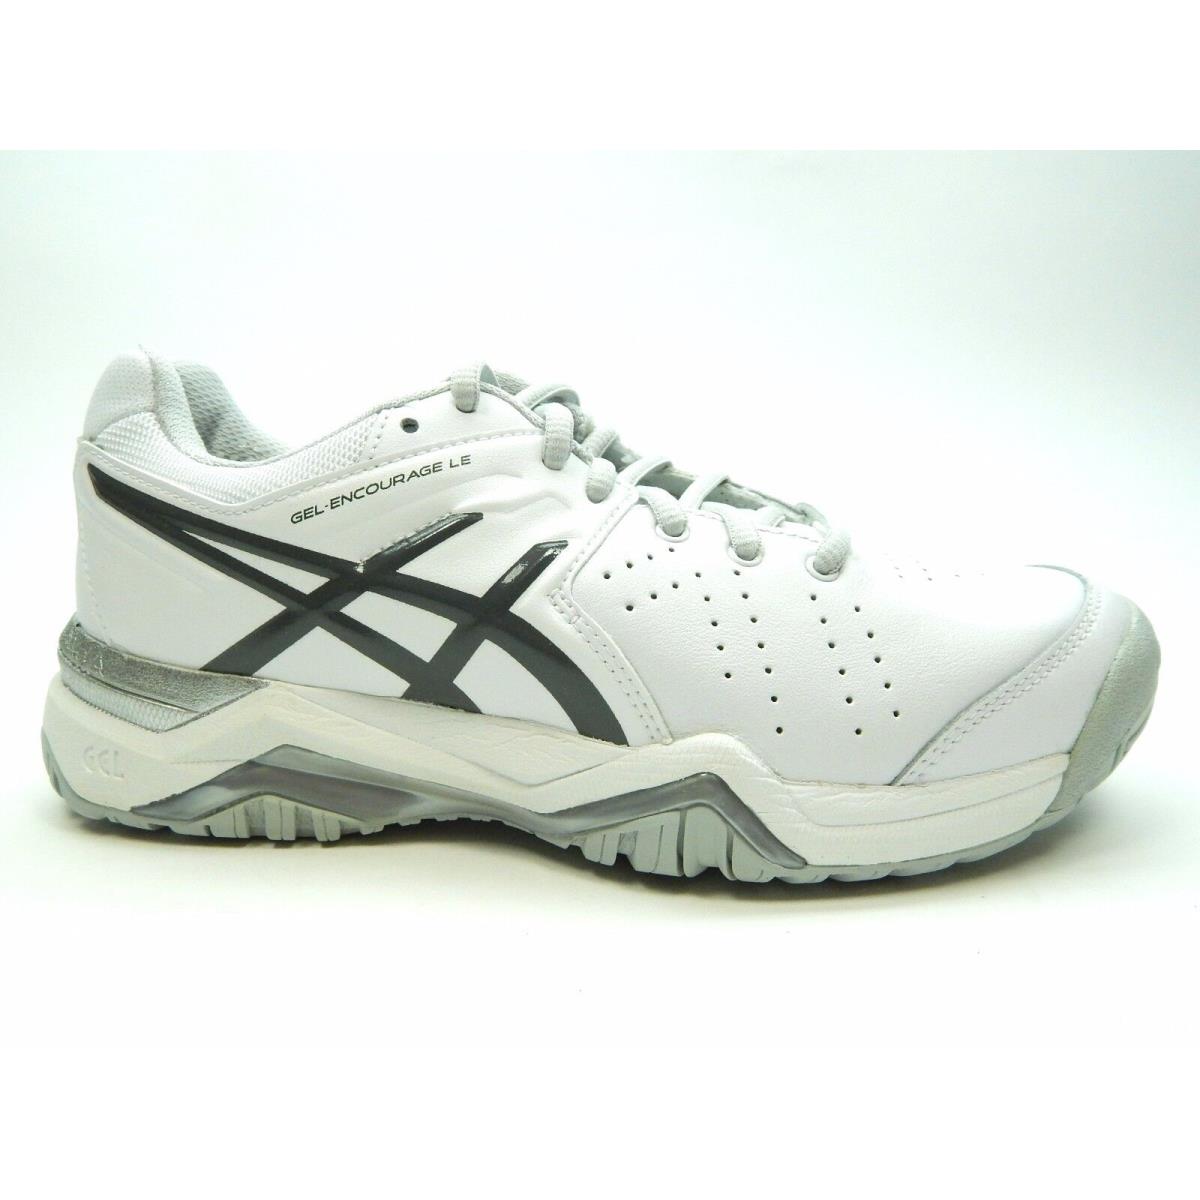 Asics Gel Encourage LE Tennis White Silver Women Shoes Size 6.0